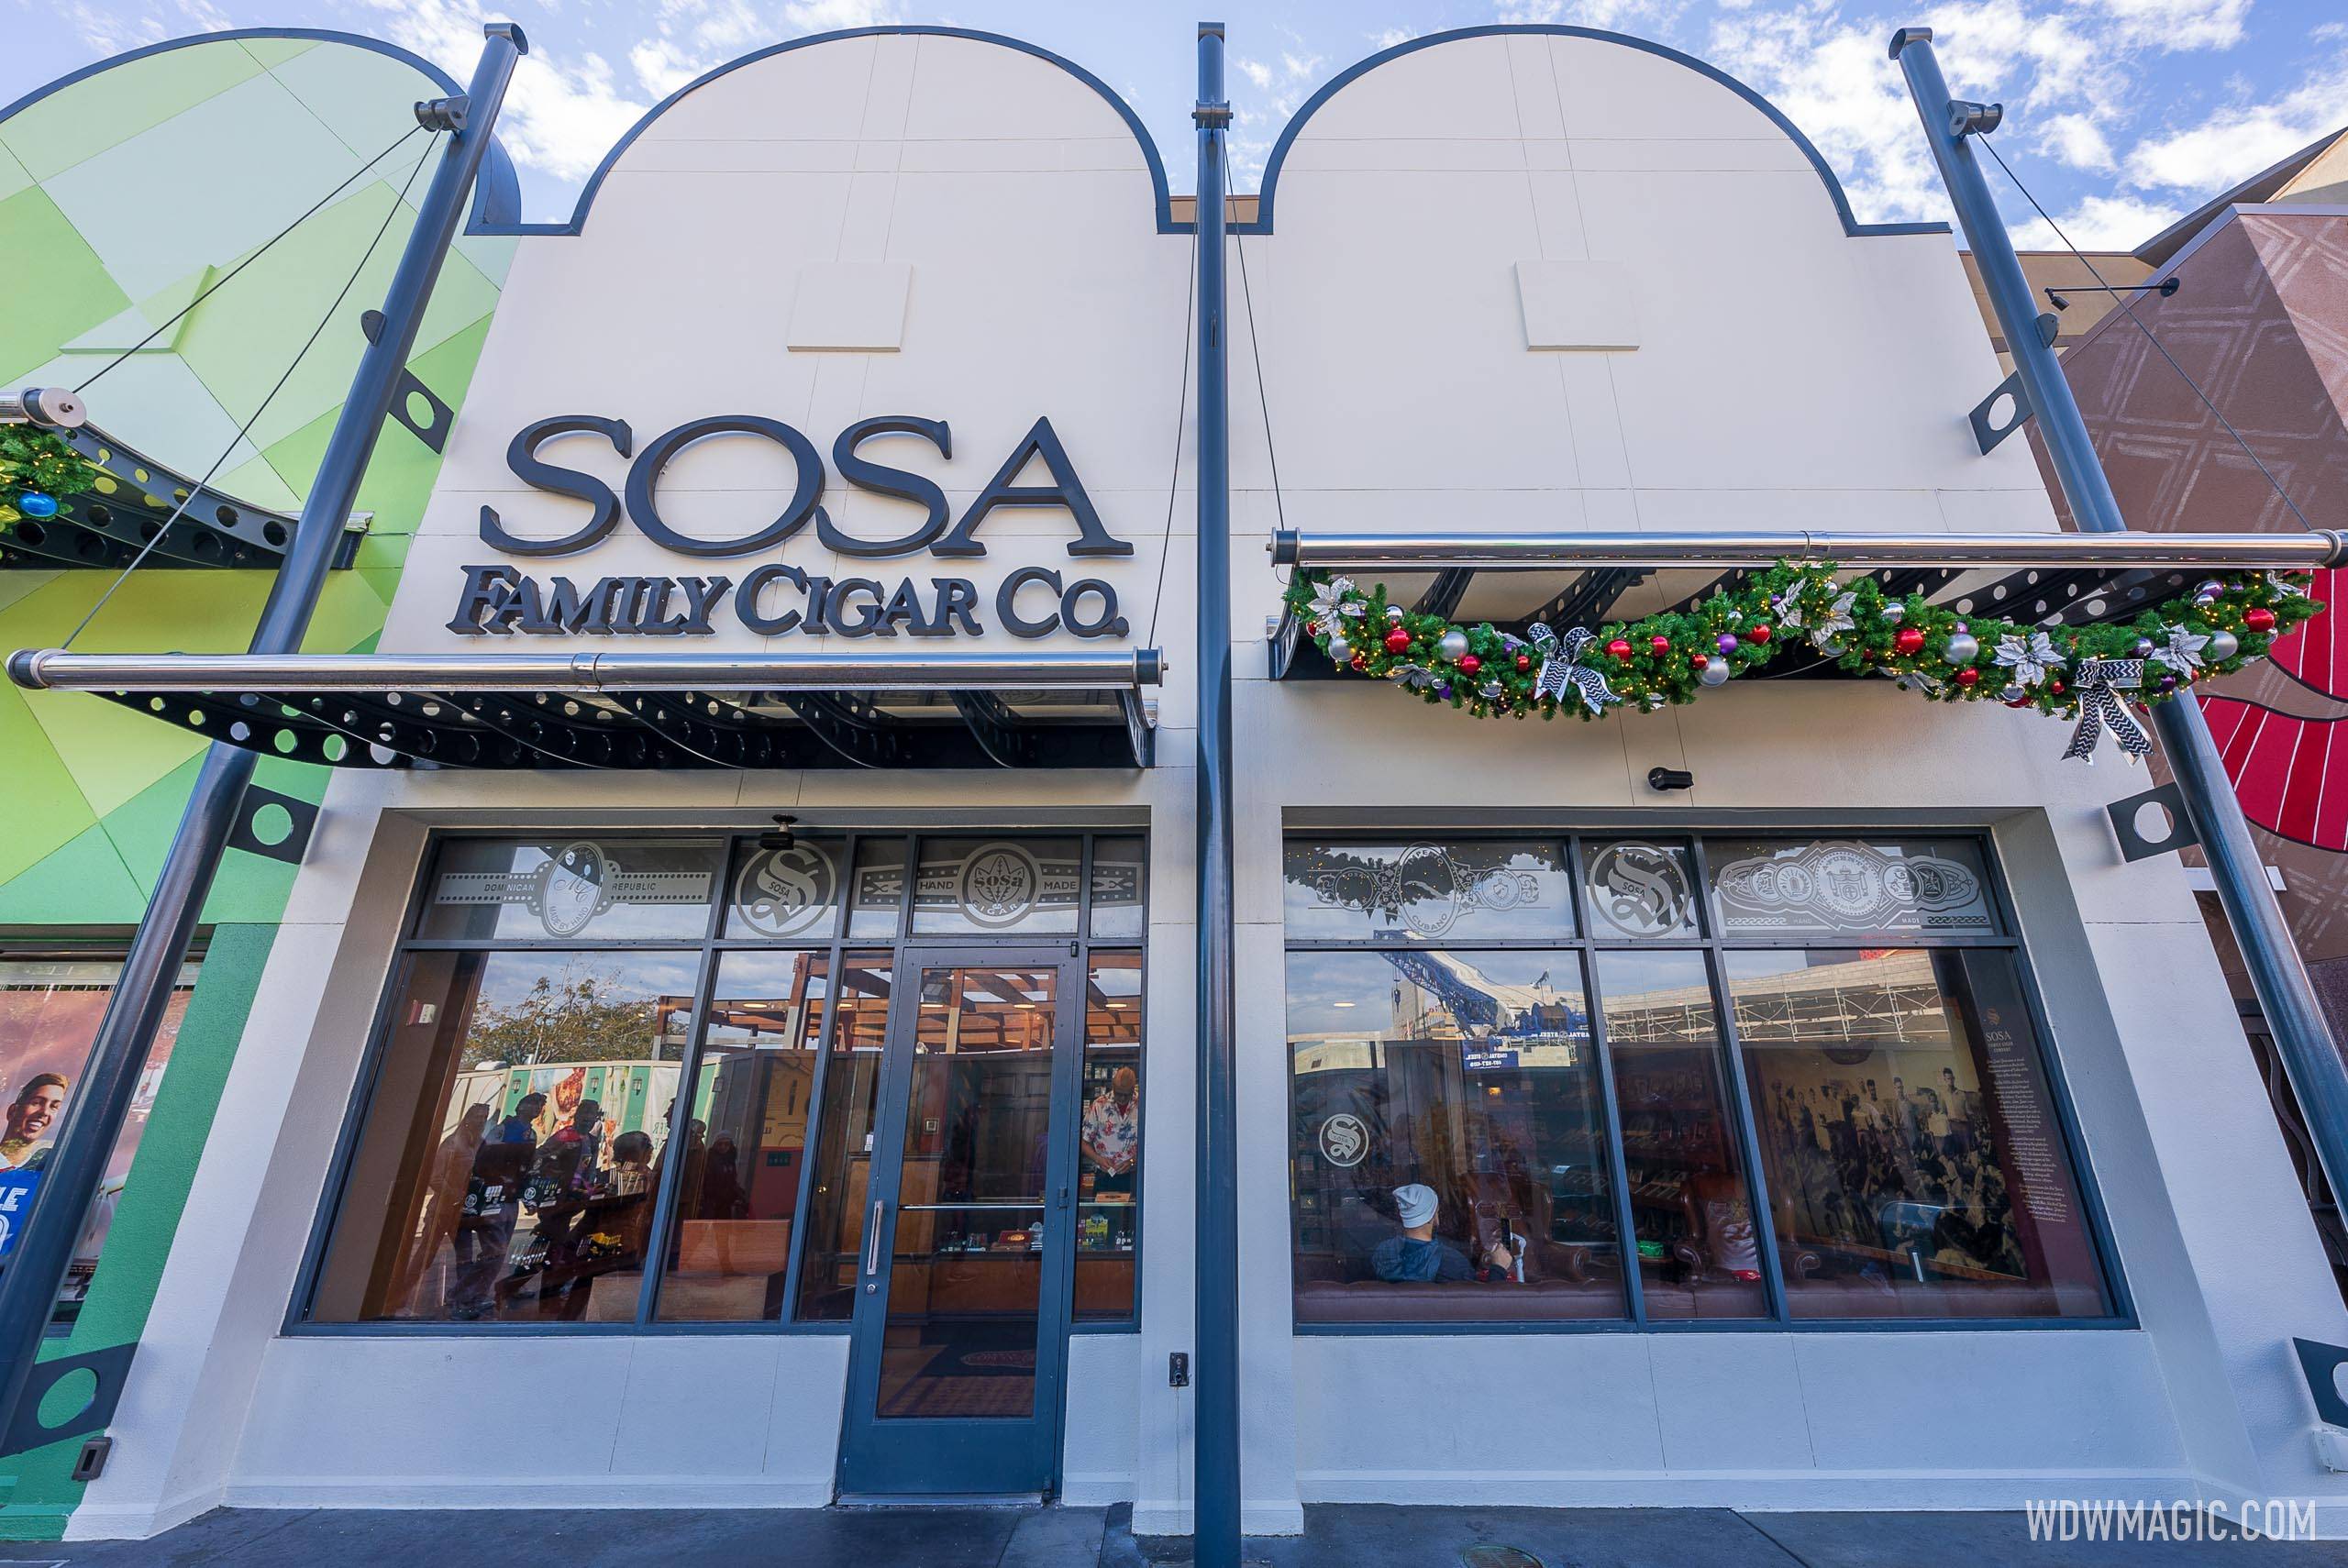 Sosa Family Cigar Co. to permanently close at Disney Springs